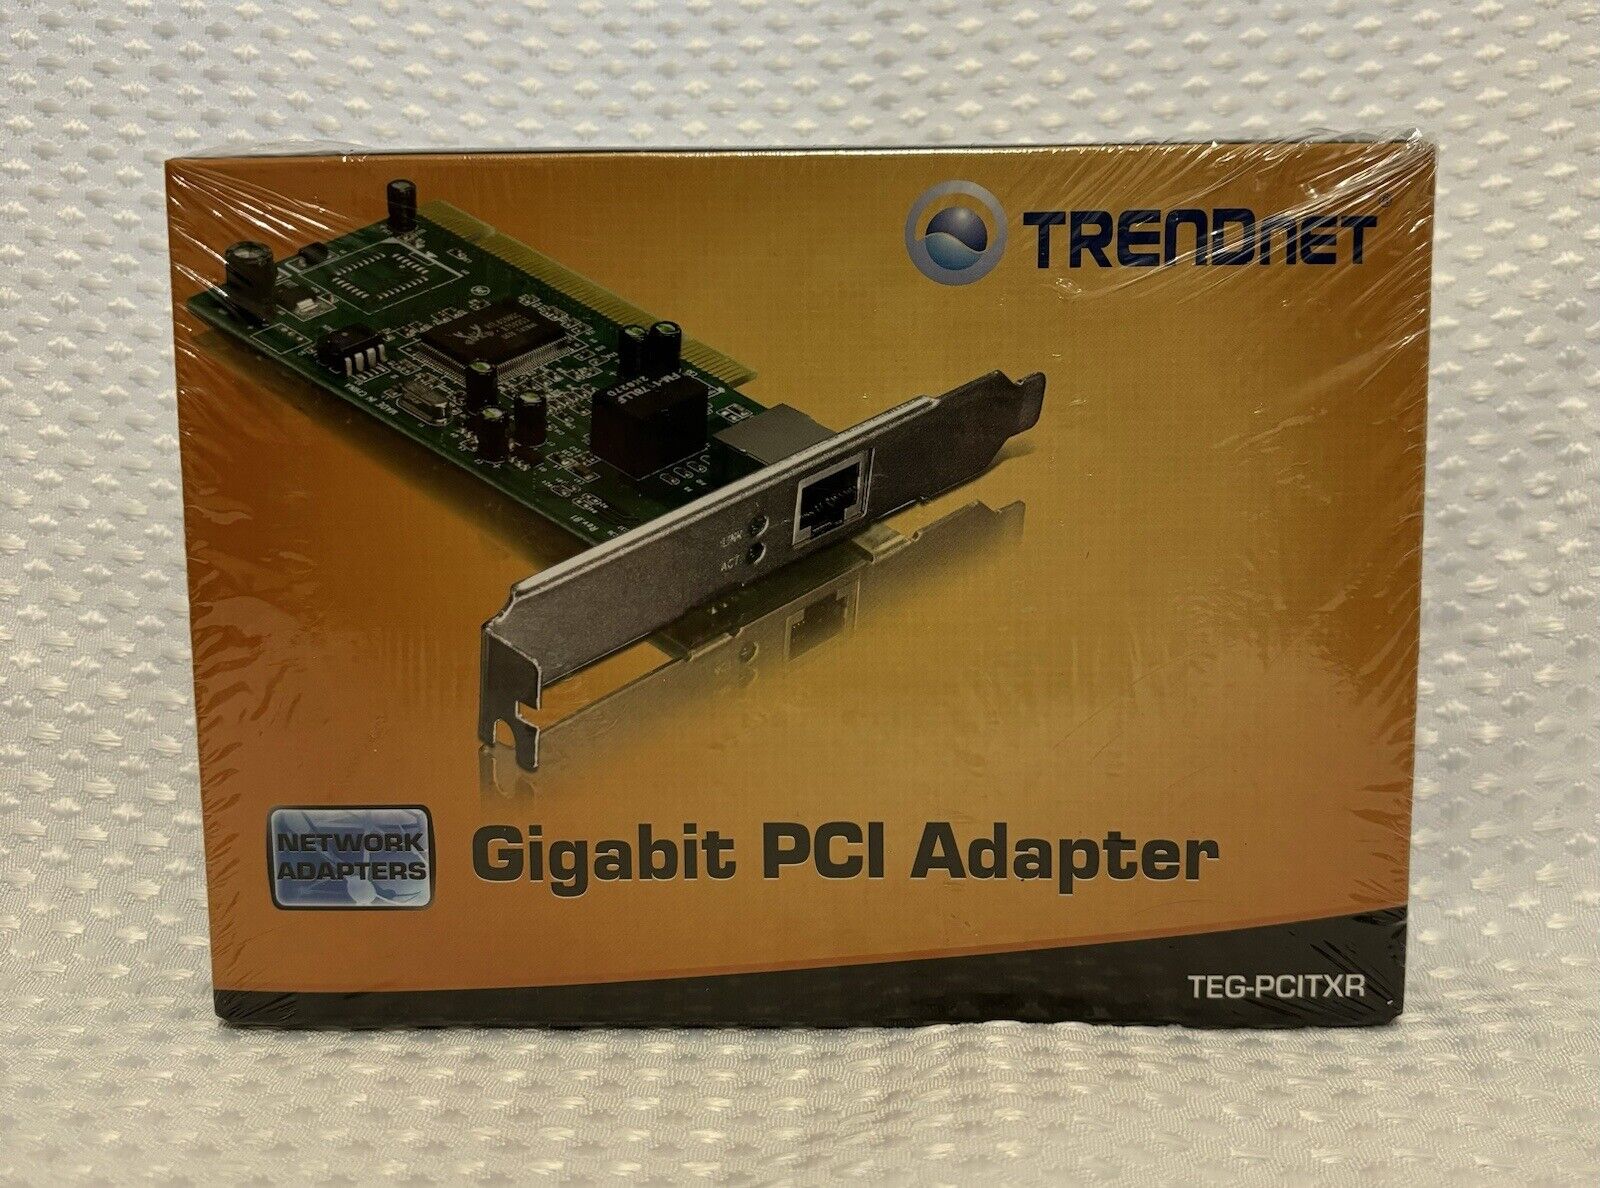 Trendnet Gigabit PCI Adapter